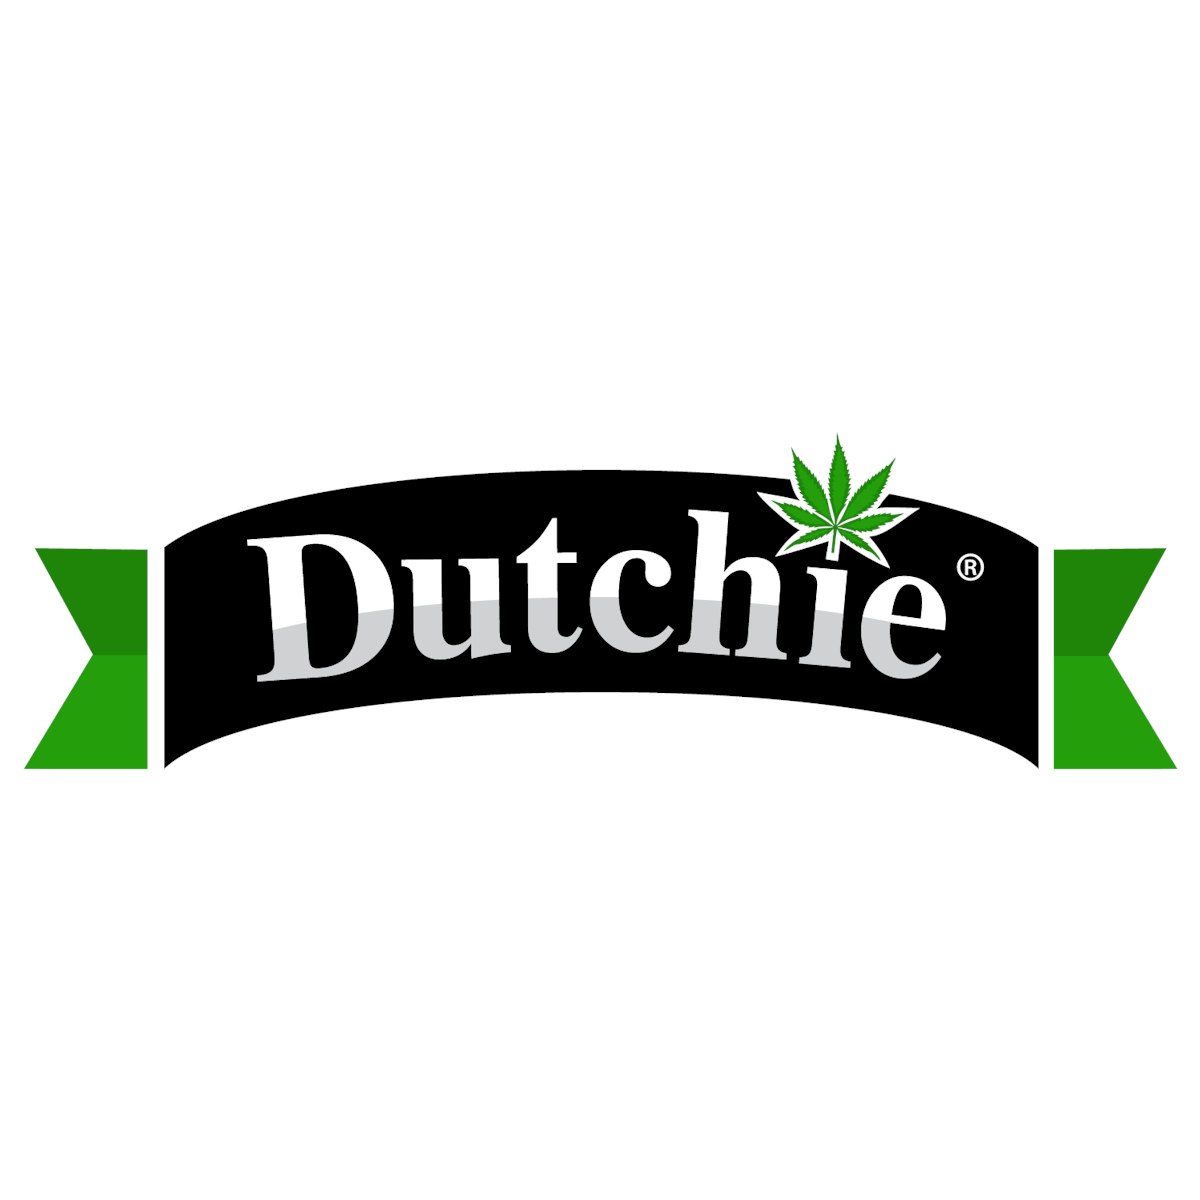 Dutchie Cannabis Flower, Pre-rolls, & Pot Seeds on Leafly